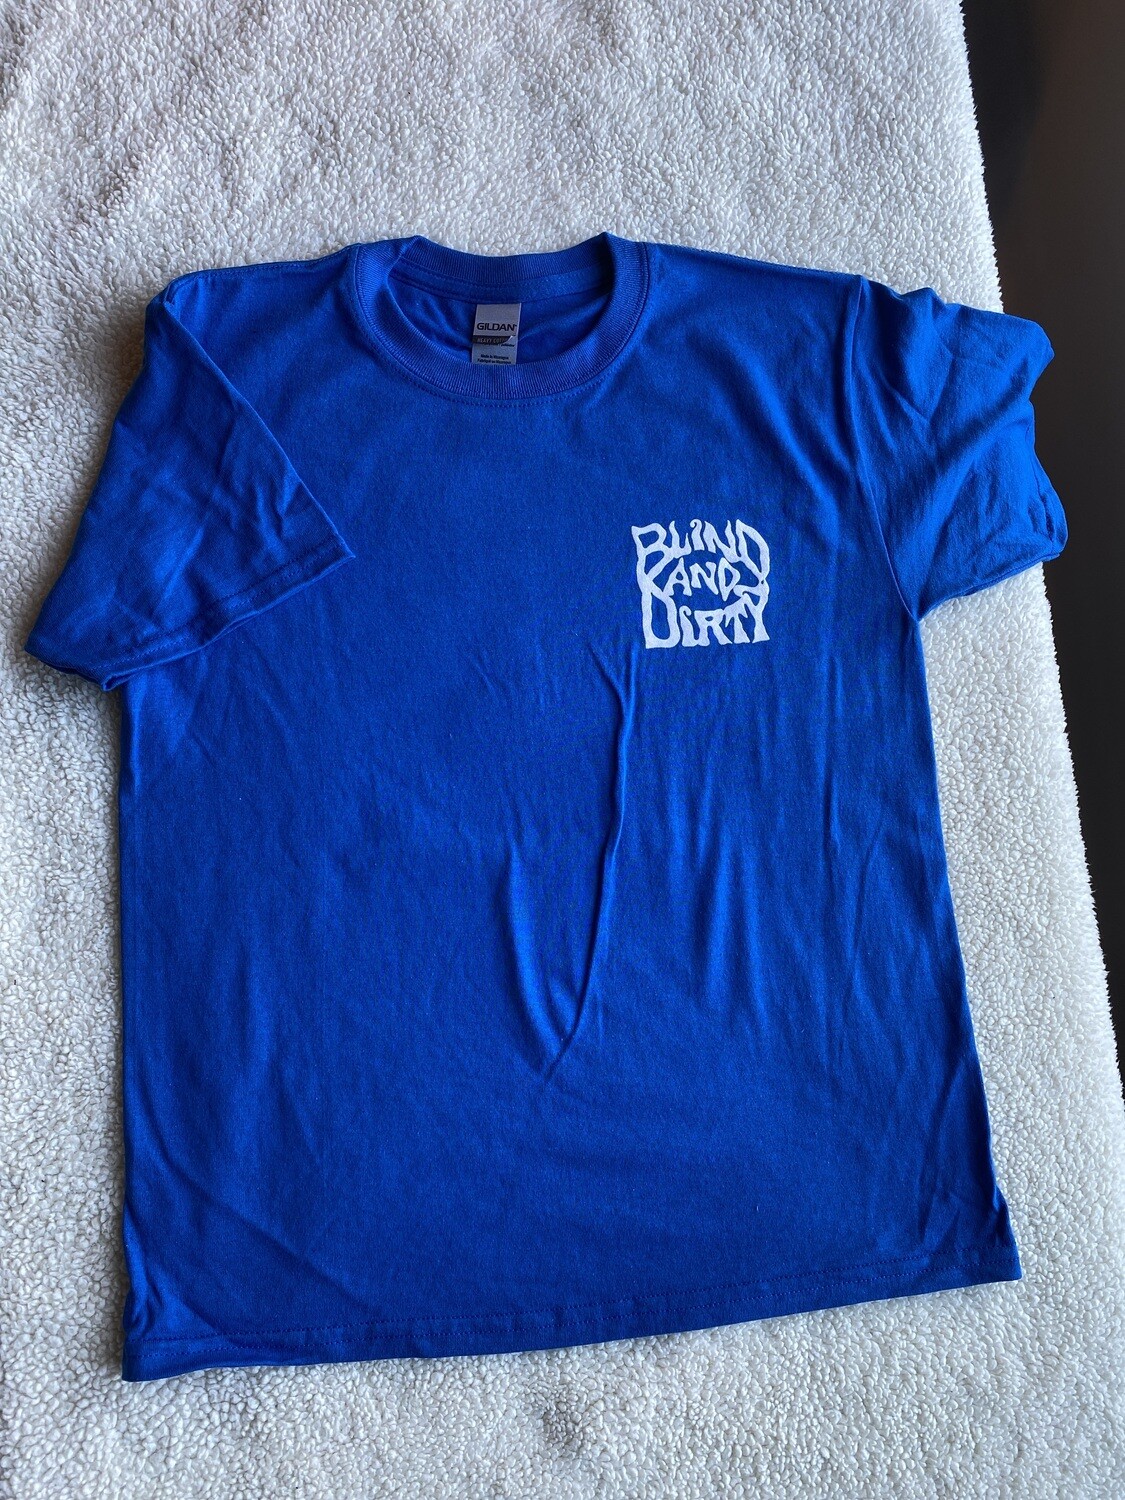 Youth t-shirt, size-medium, color-royal blue